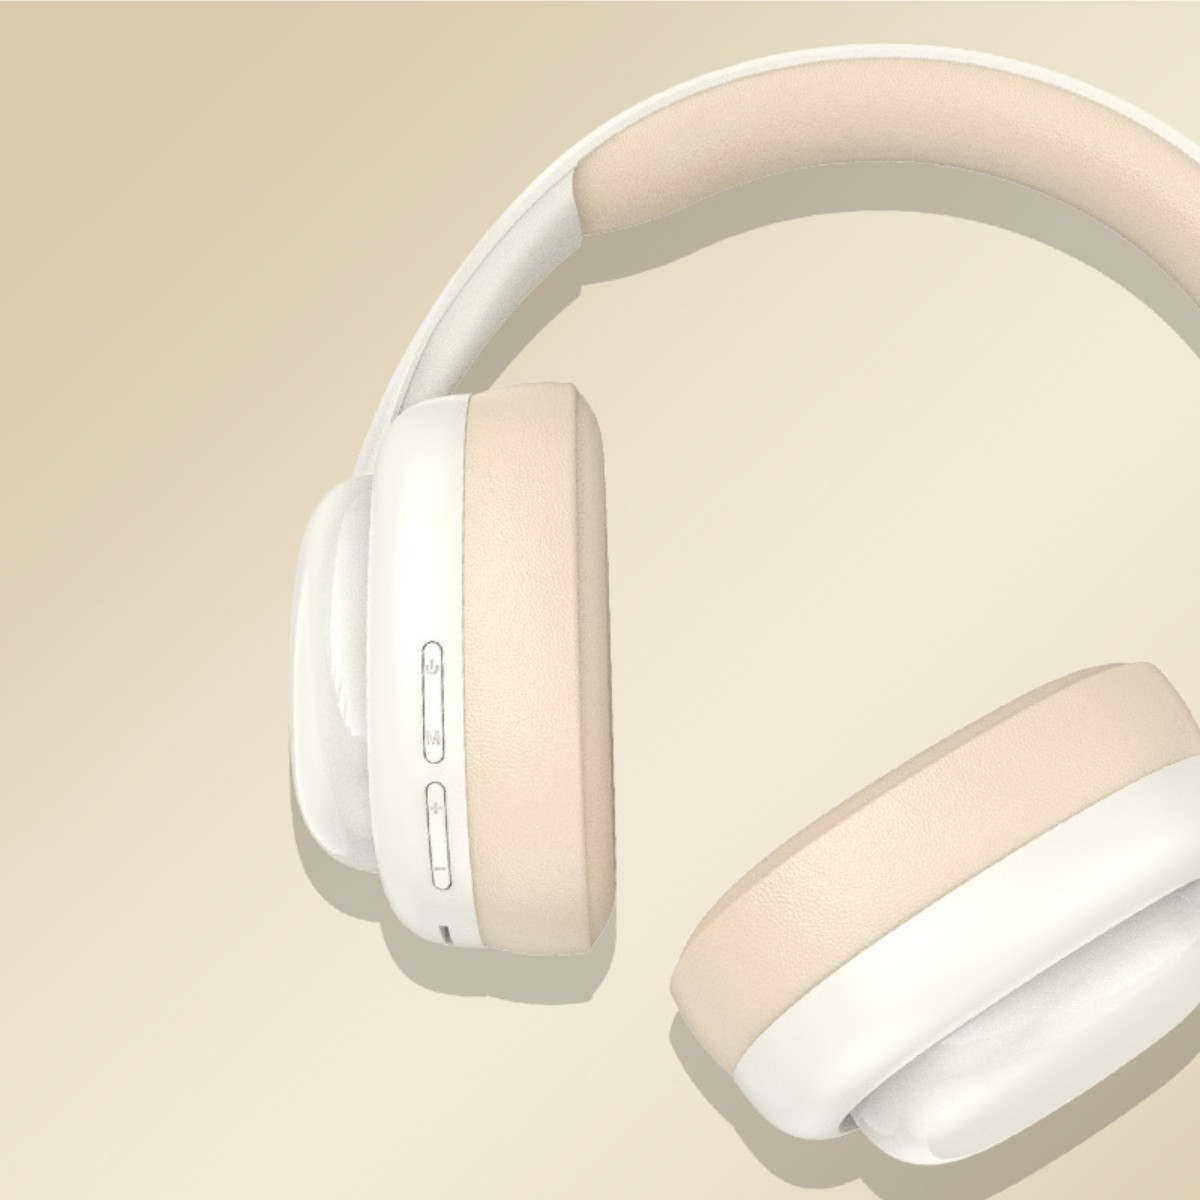 Kopfhörer weiße mit Weiß Kopfhörern, Bluetooth-Kopfhörer Bluetooth Bluetooth Over-ear Kopfhörer, SYNTEK